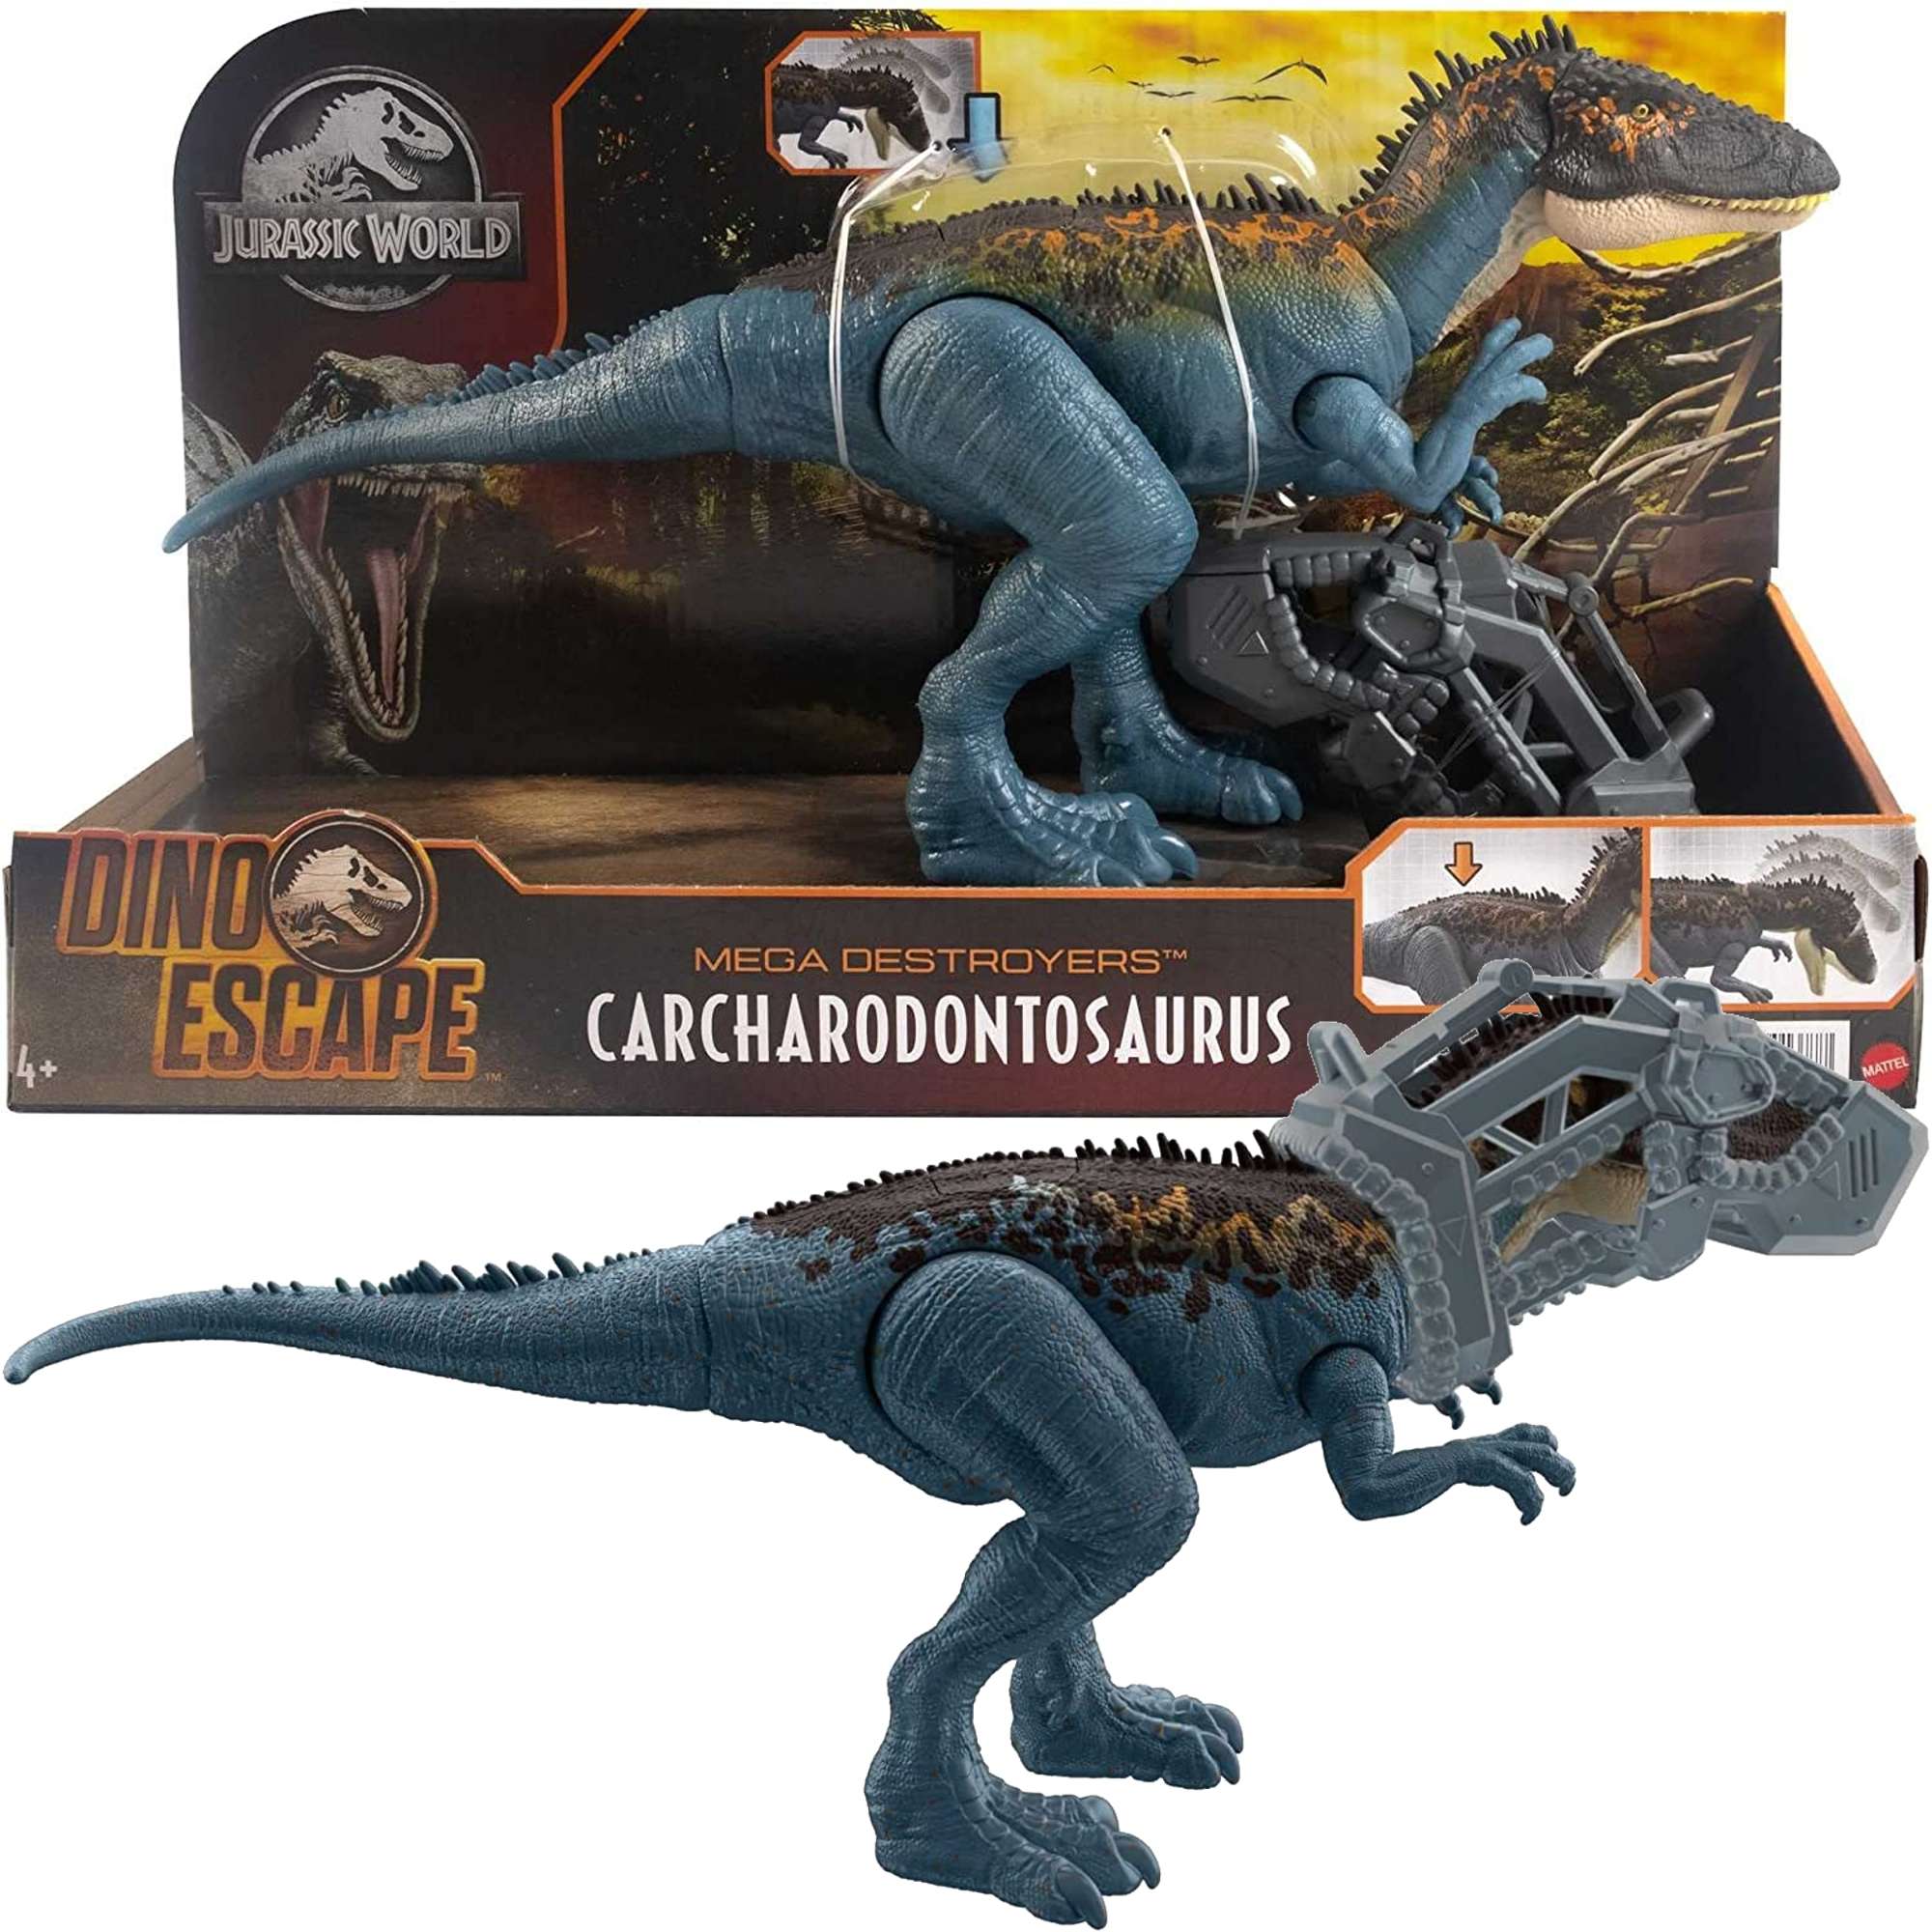 Jurassic World Dino Escape figurka Carcharodontosaurus